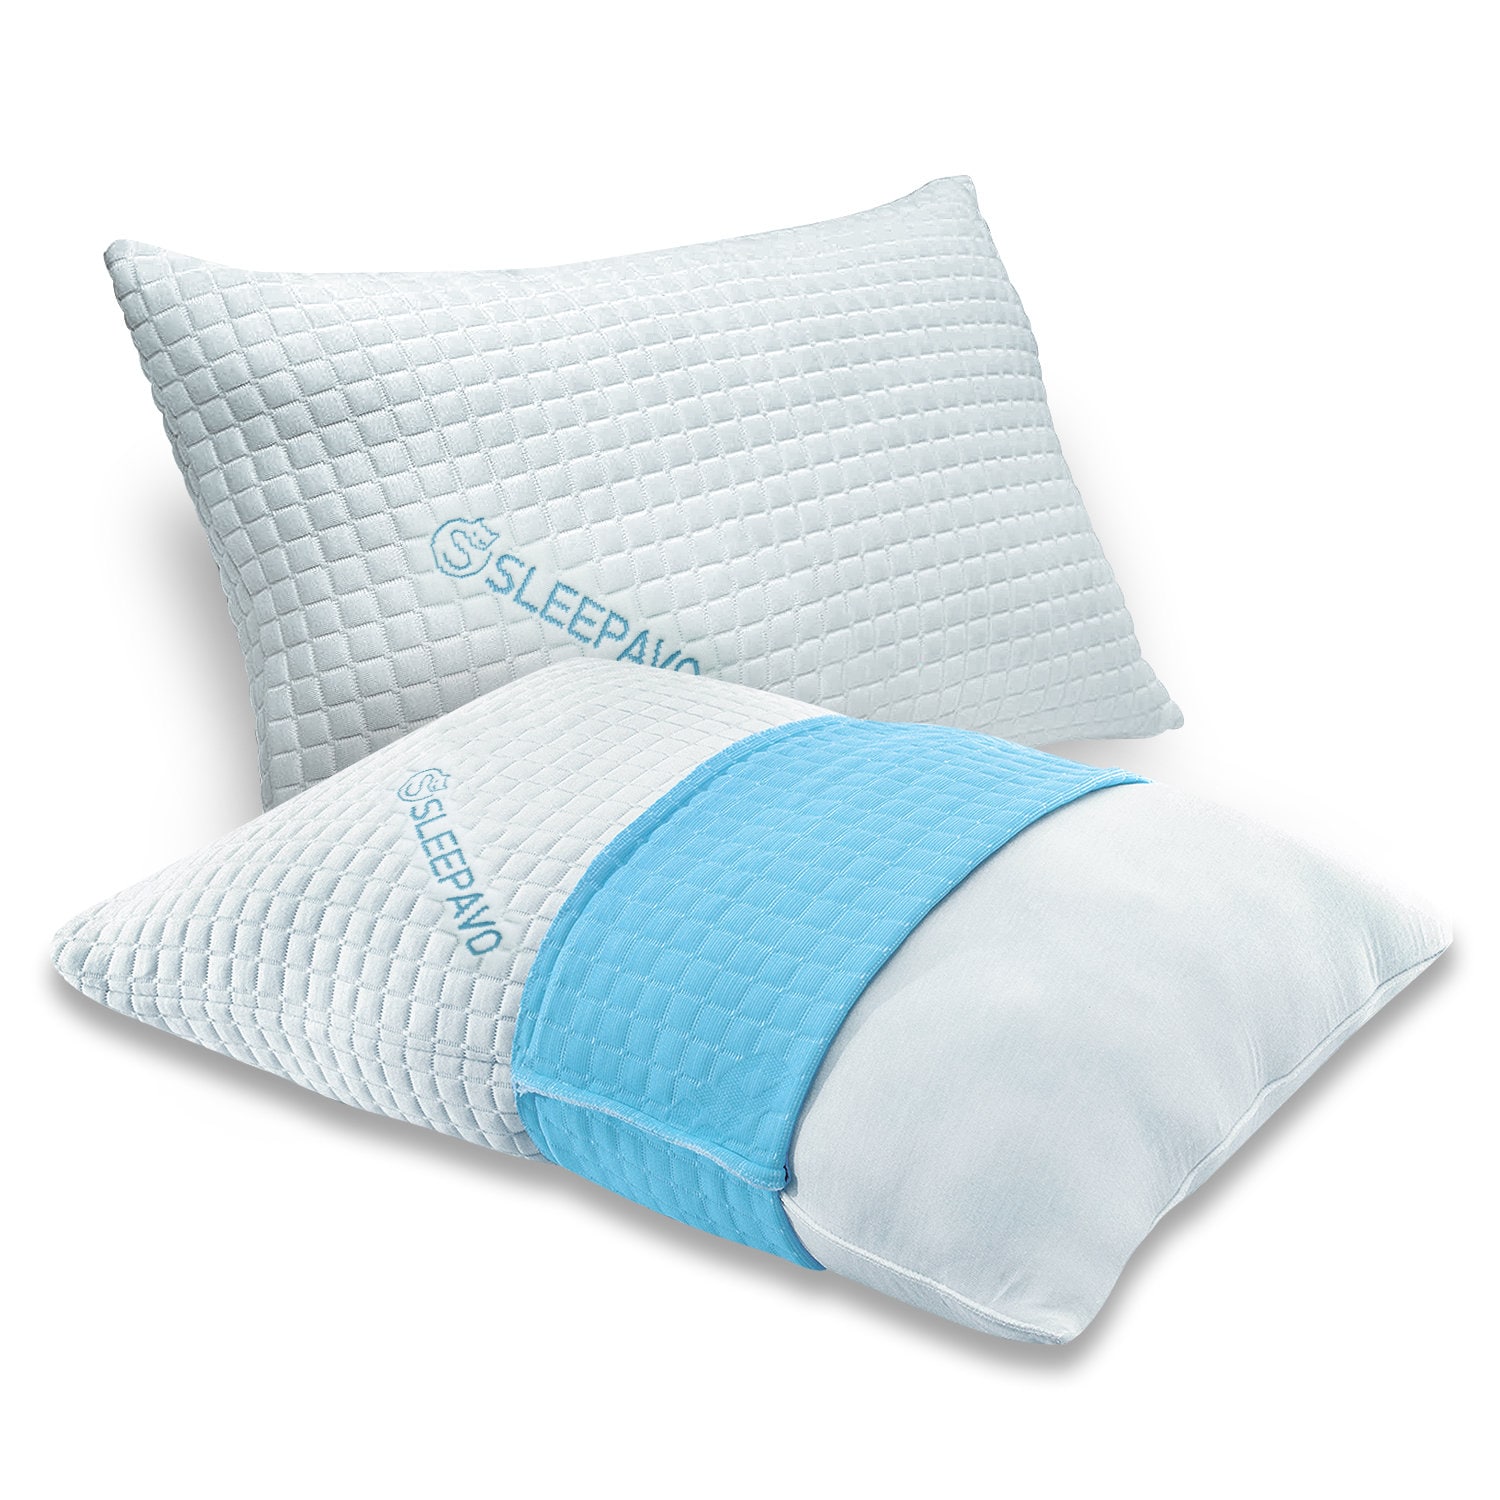 Insert cushion 45x65 cm - Nordic Sleep by Fossflakes